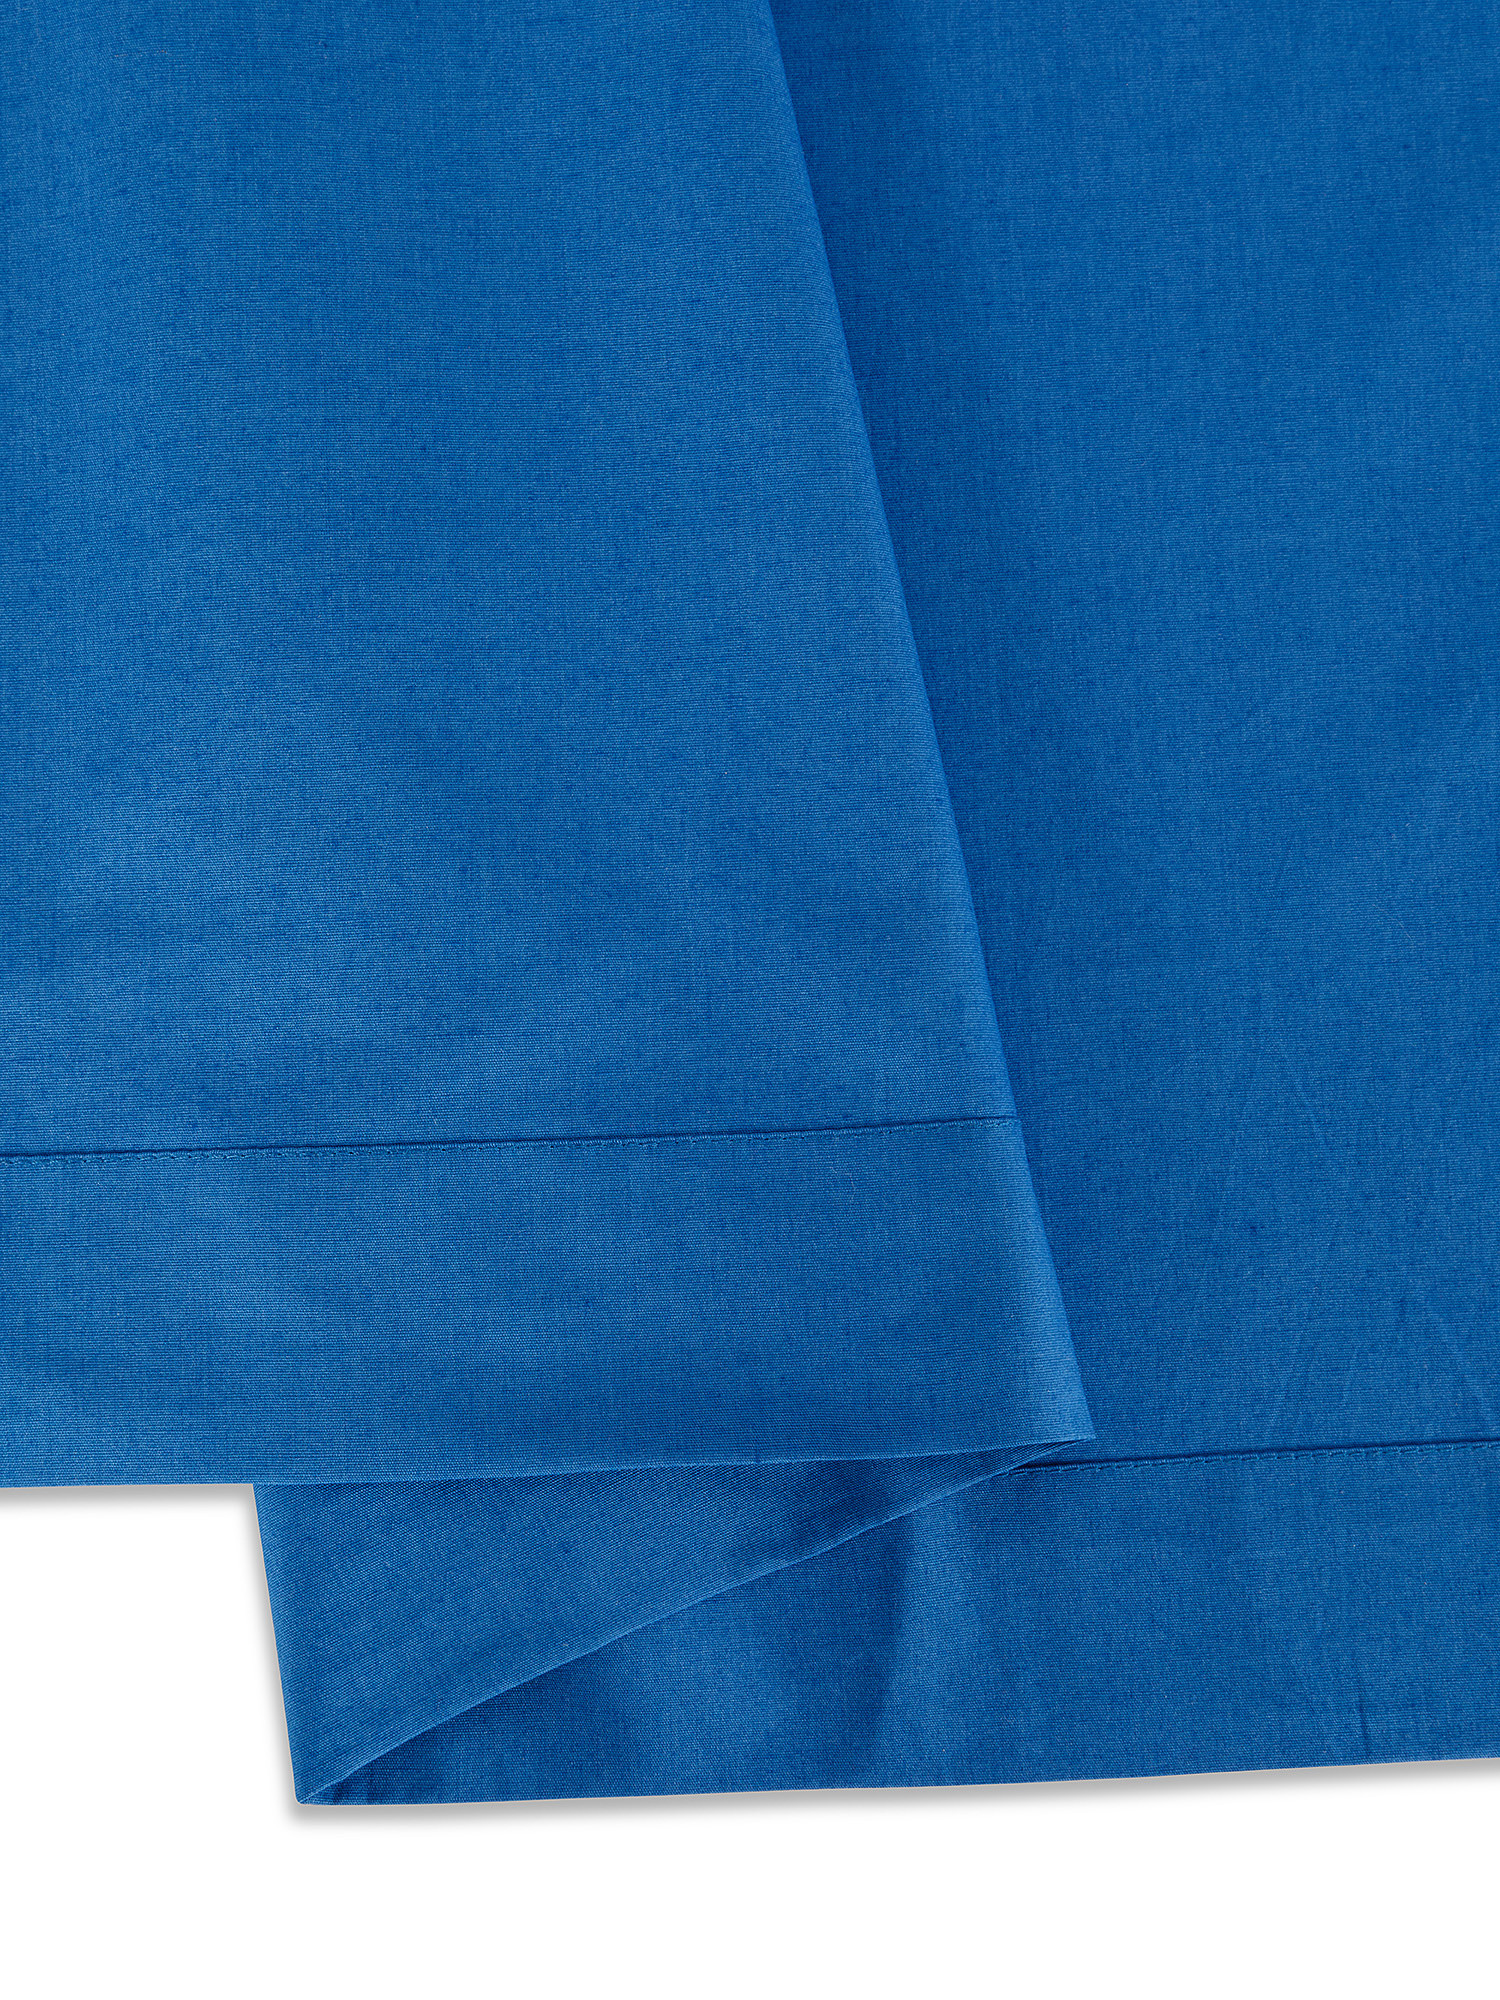 Parure lenzuolo cotone percalle tinta unita, Blu, large image number 2